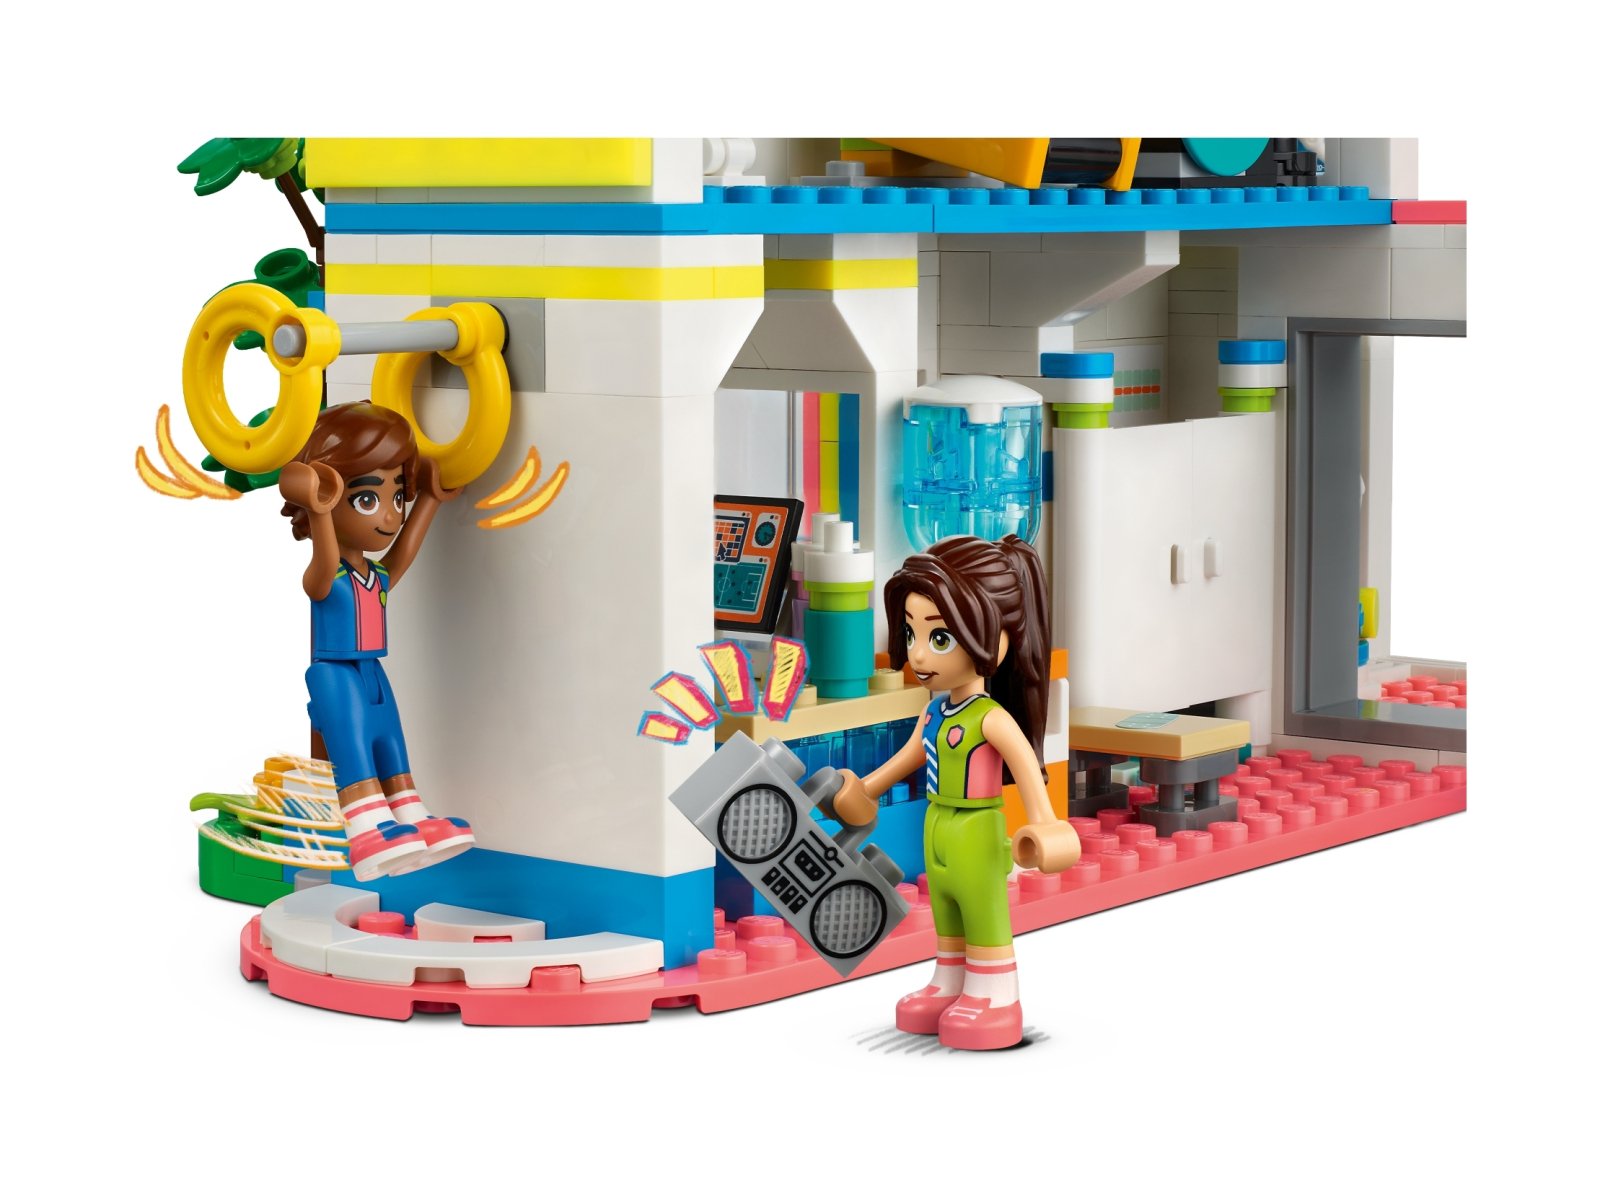 LEGO Friends Centrum sportowe 41744